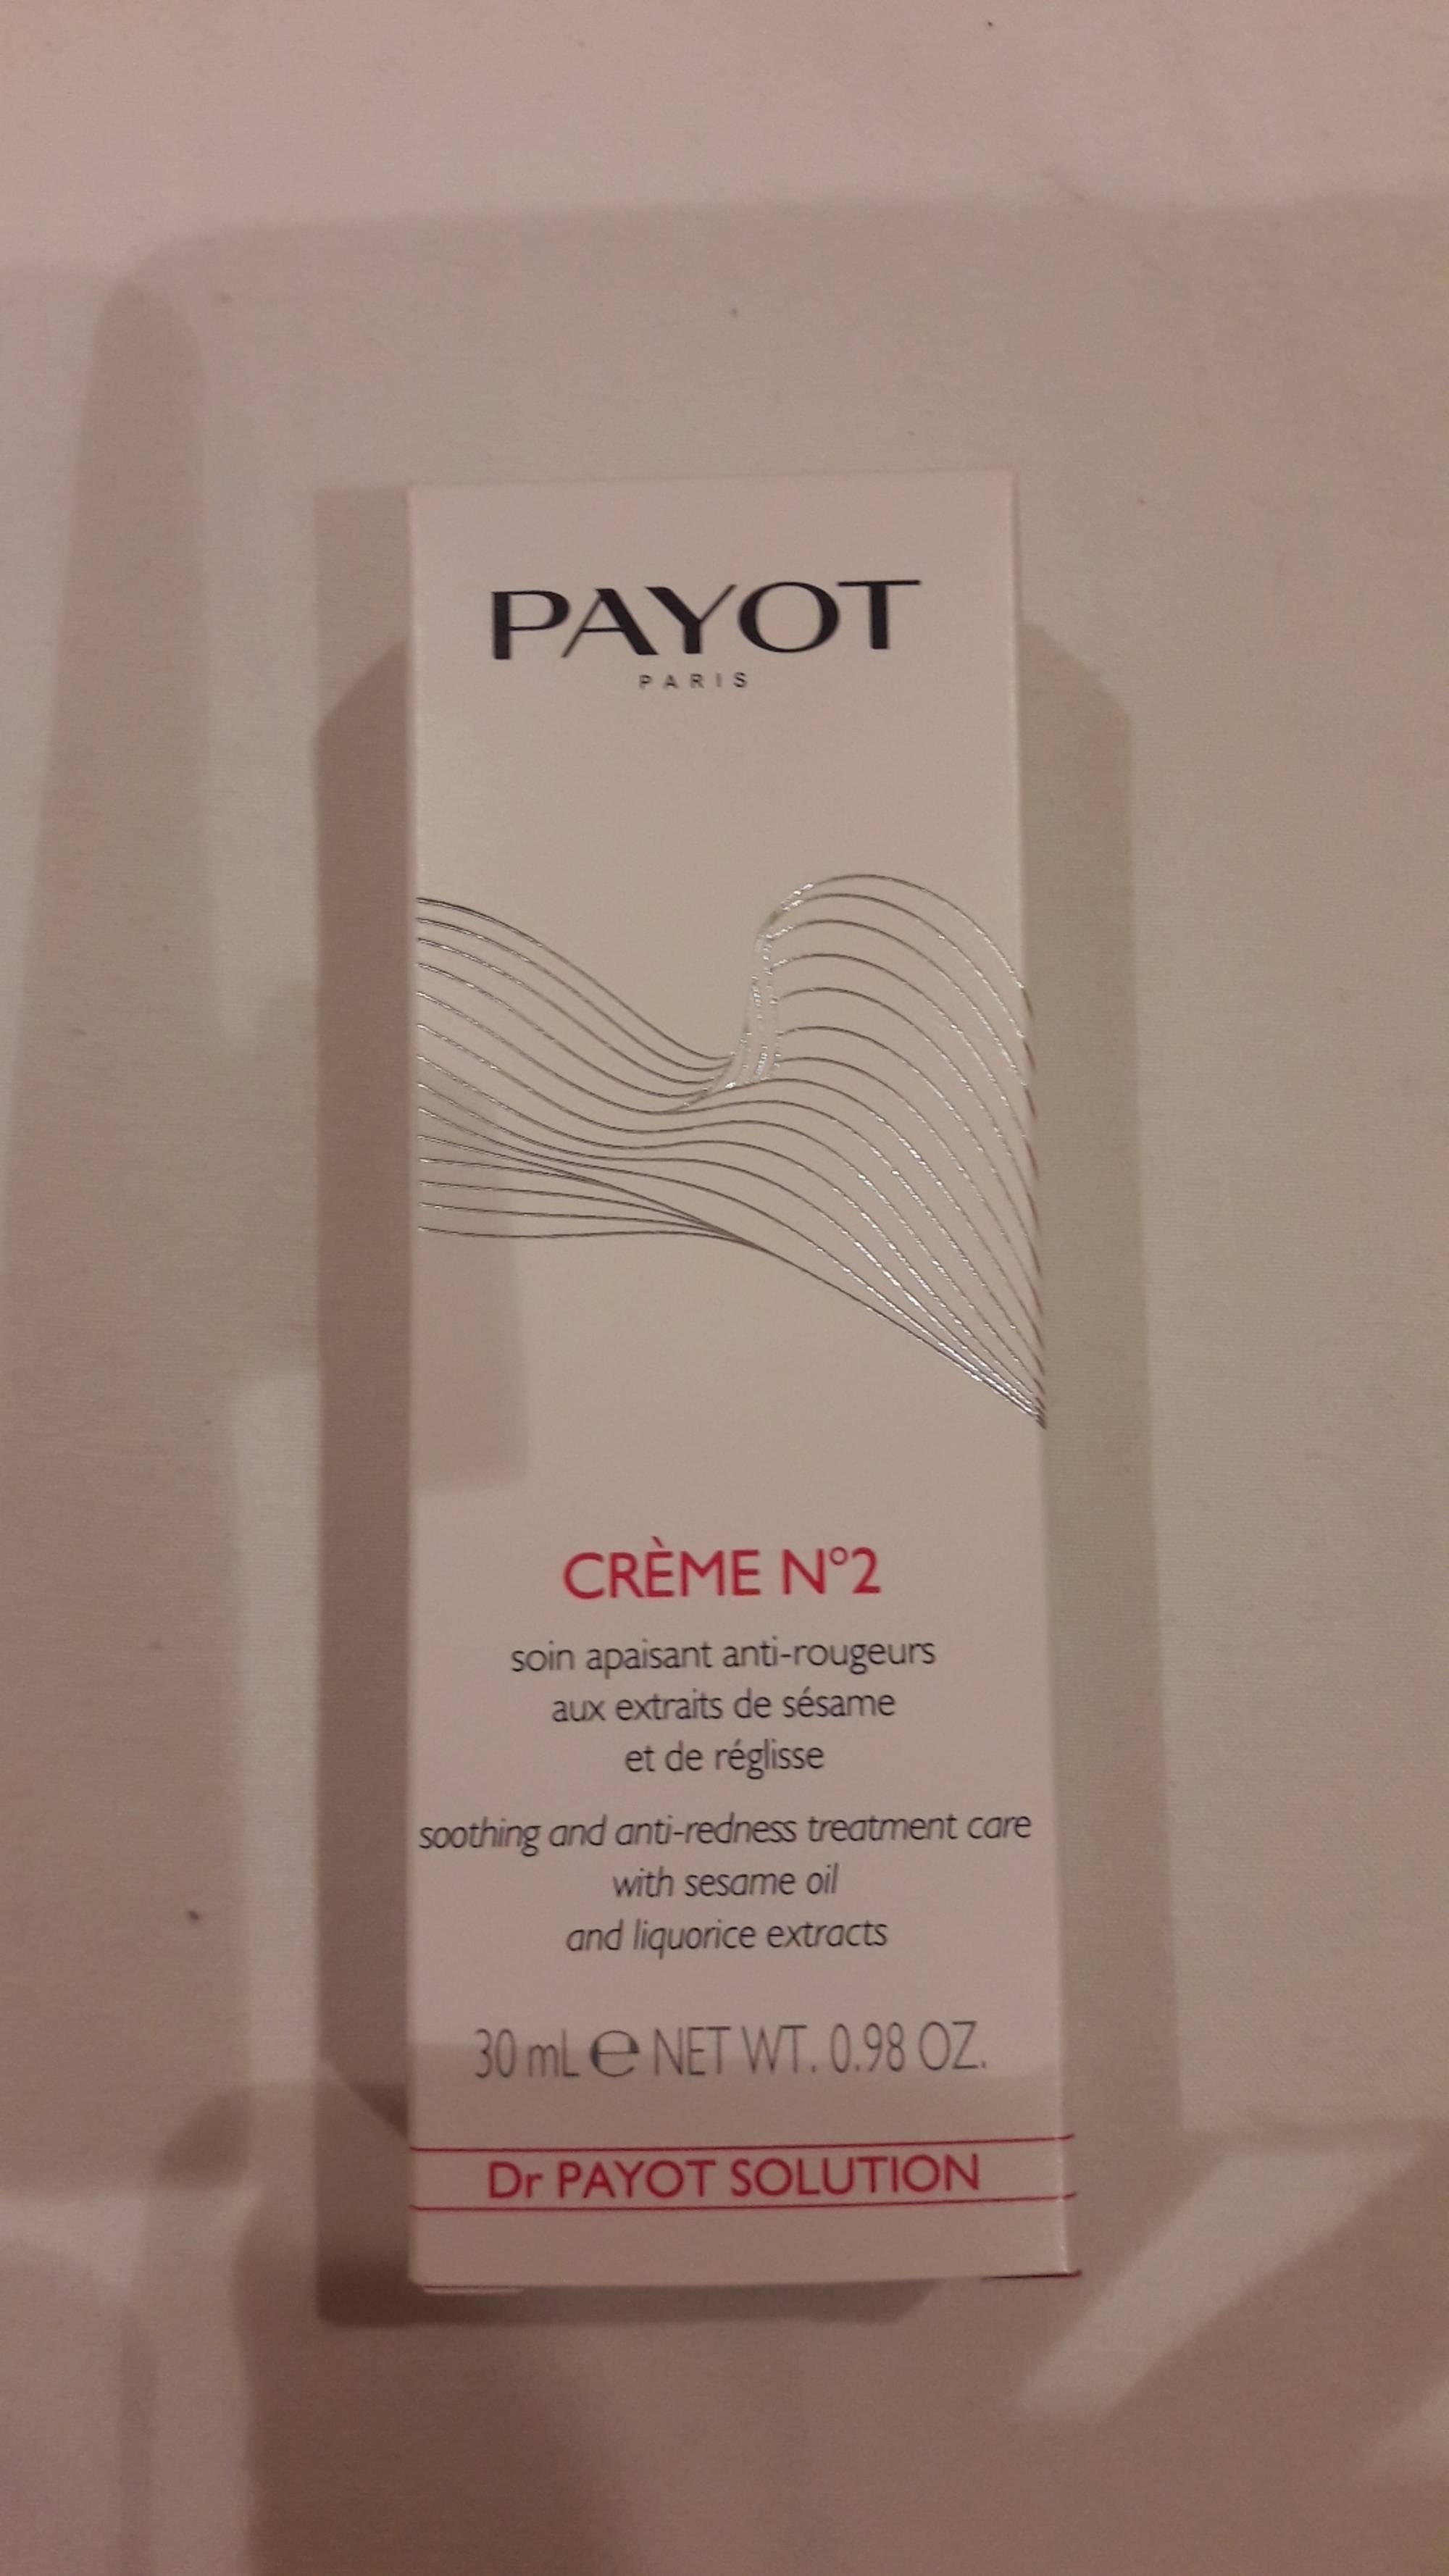 PAYOT - Crème N° 2 - Soin apaisant anti-rougeurs